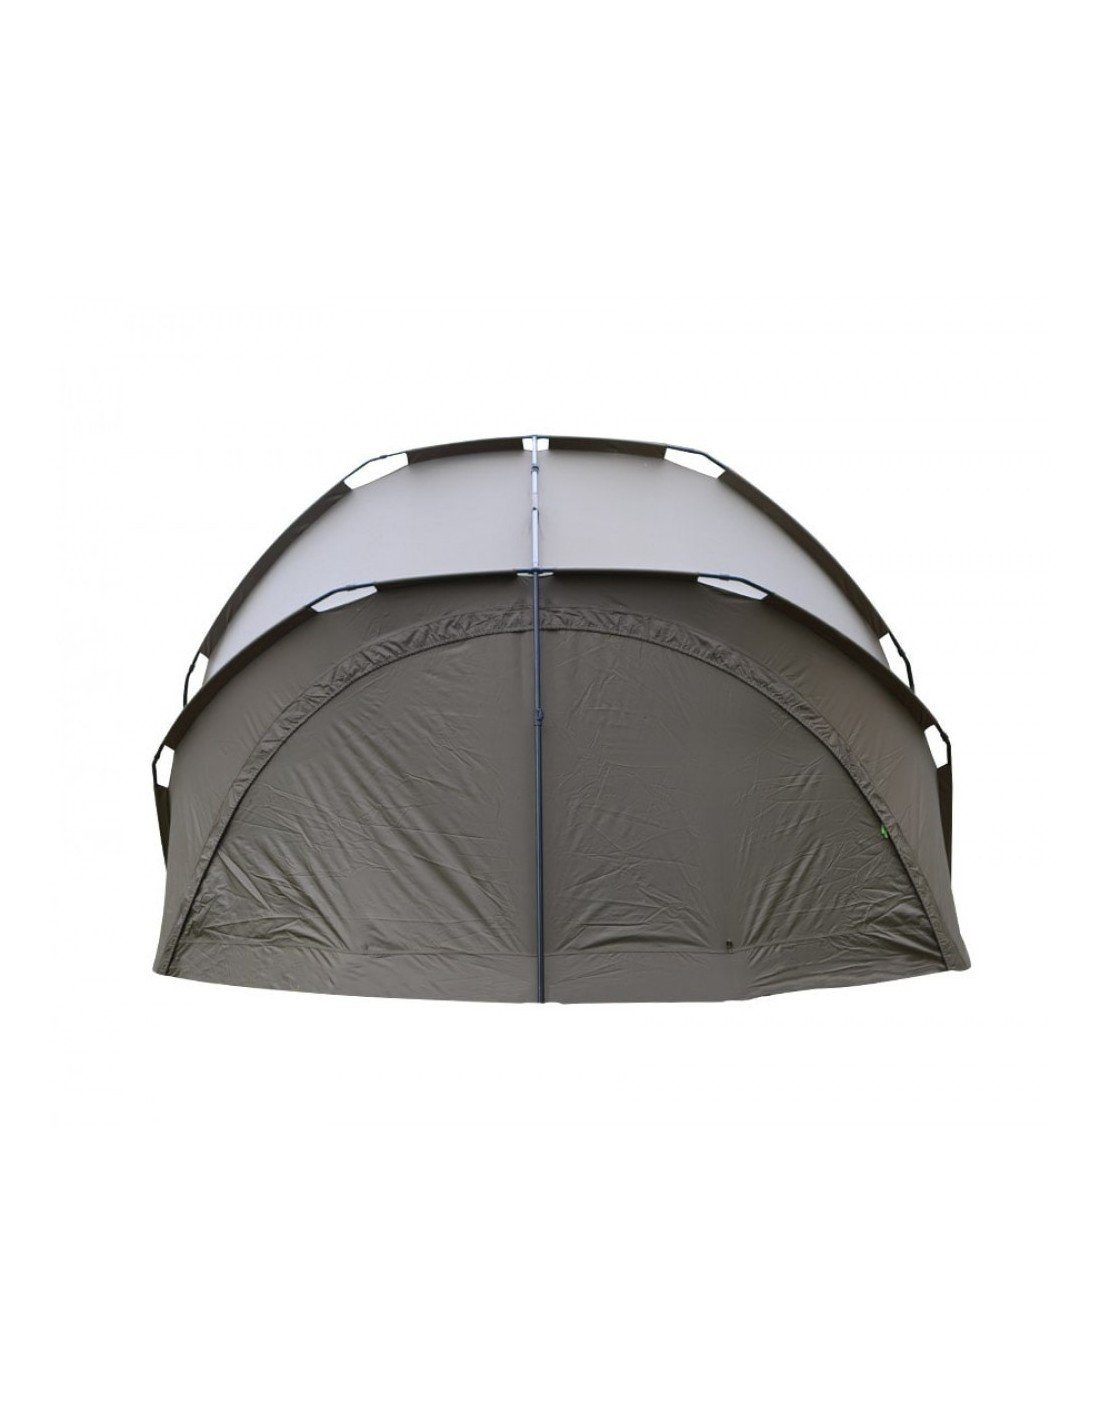 Carp Pro Diamond Dome 2 Man CPB0252 палатка